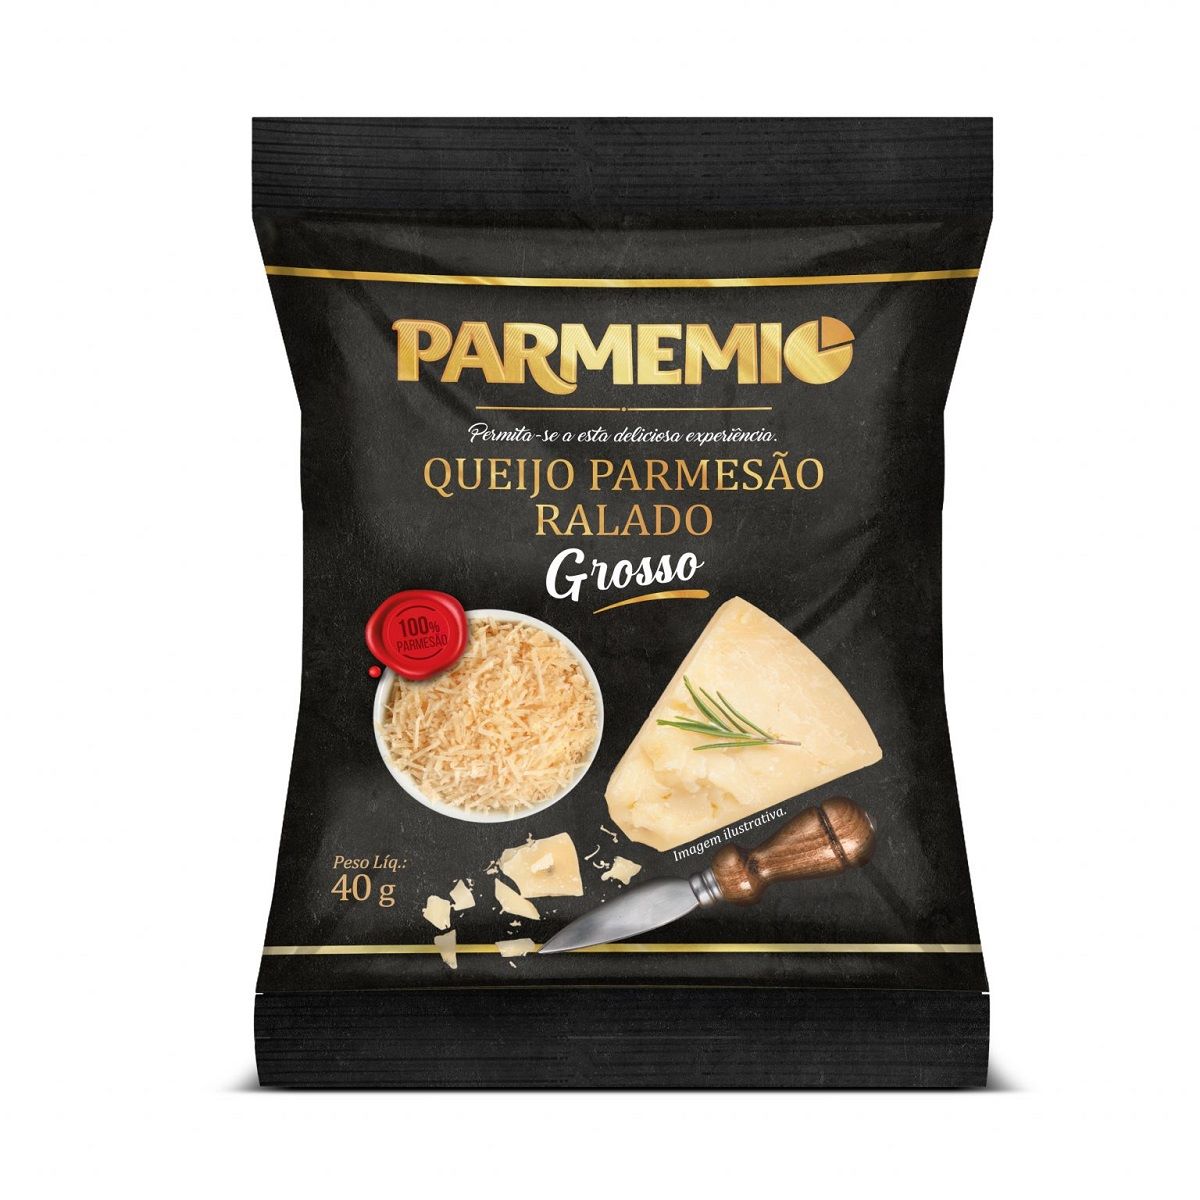 queijo-parmesao-ral-grosso-parmemio-40g-1.jpg